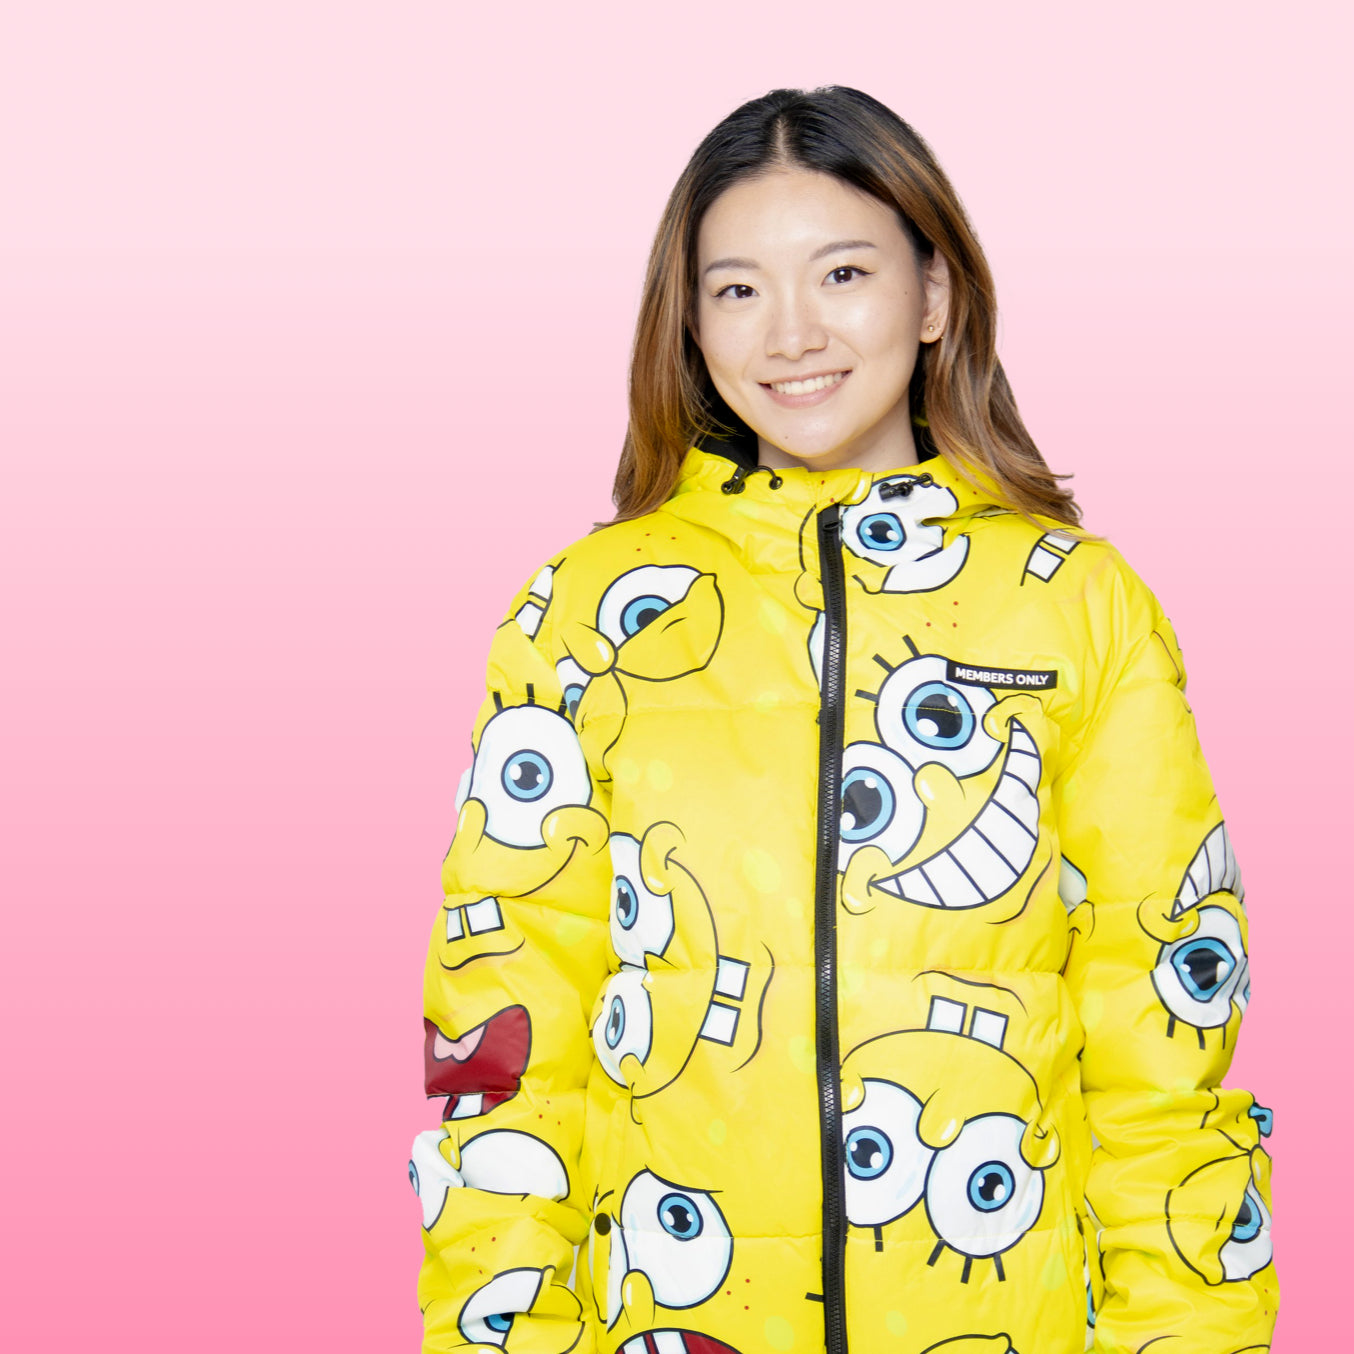 Girl in spongebob squarepants yellow puffer jacket